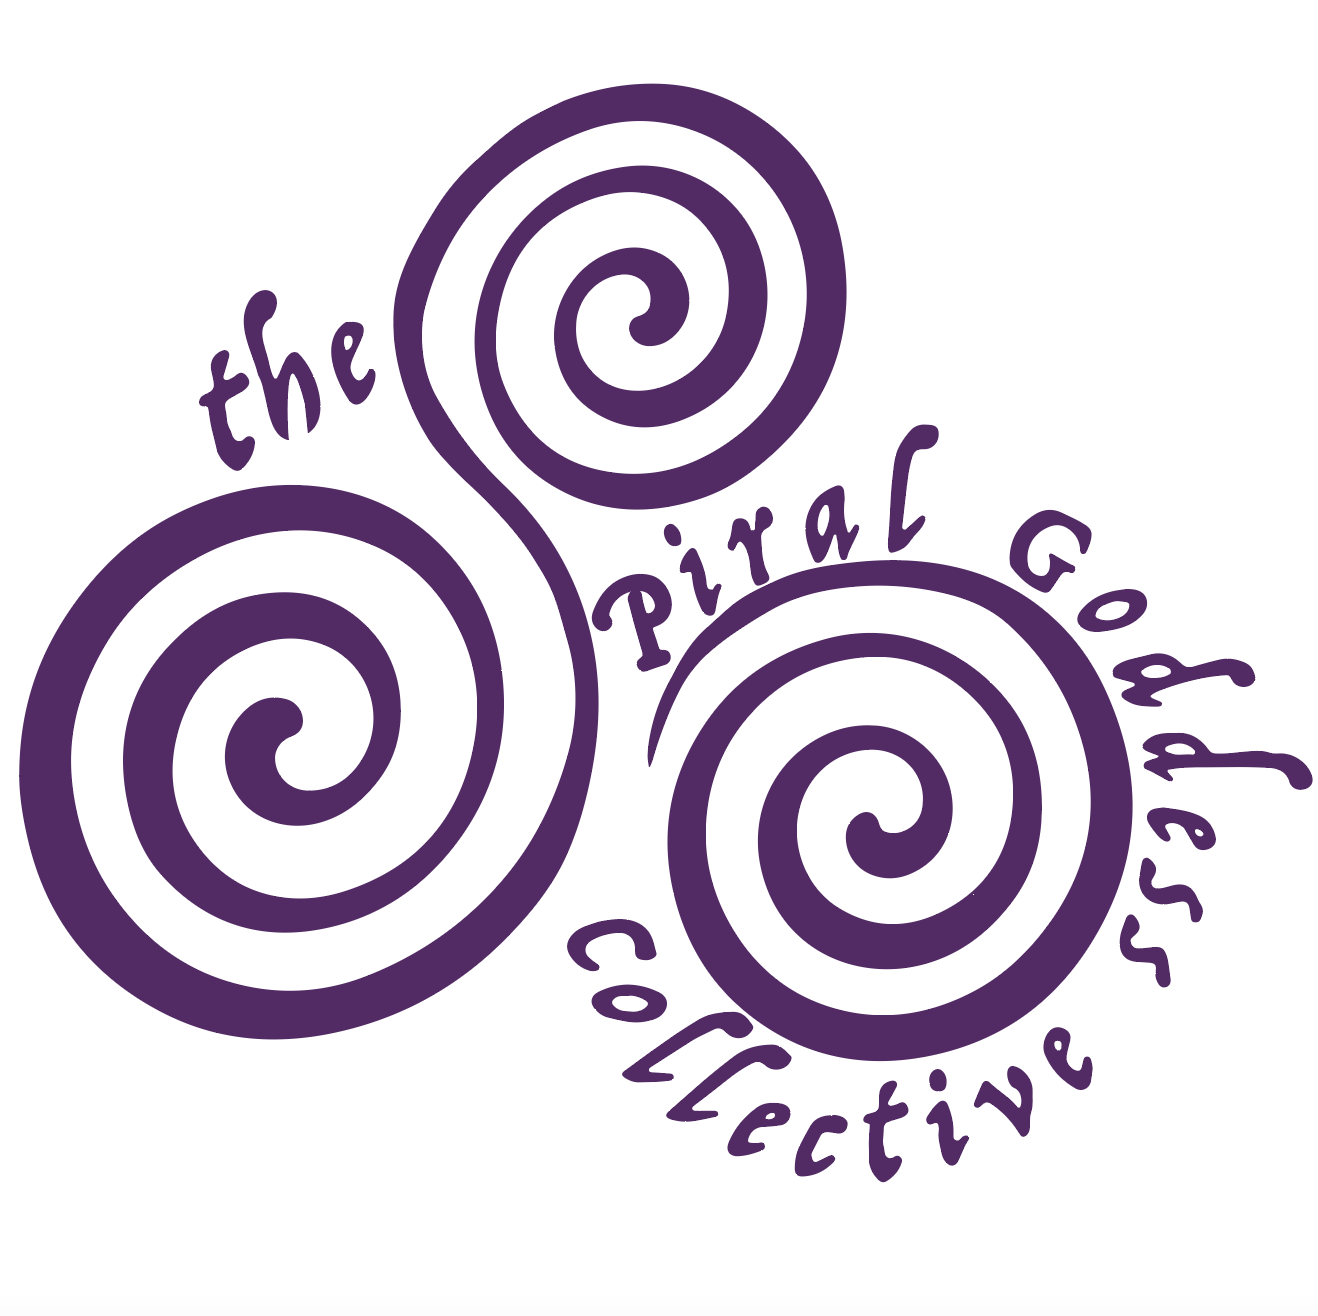 The Spiral Goddess Collective